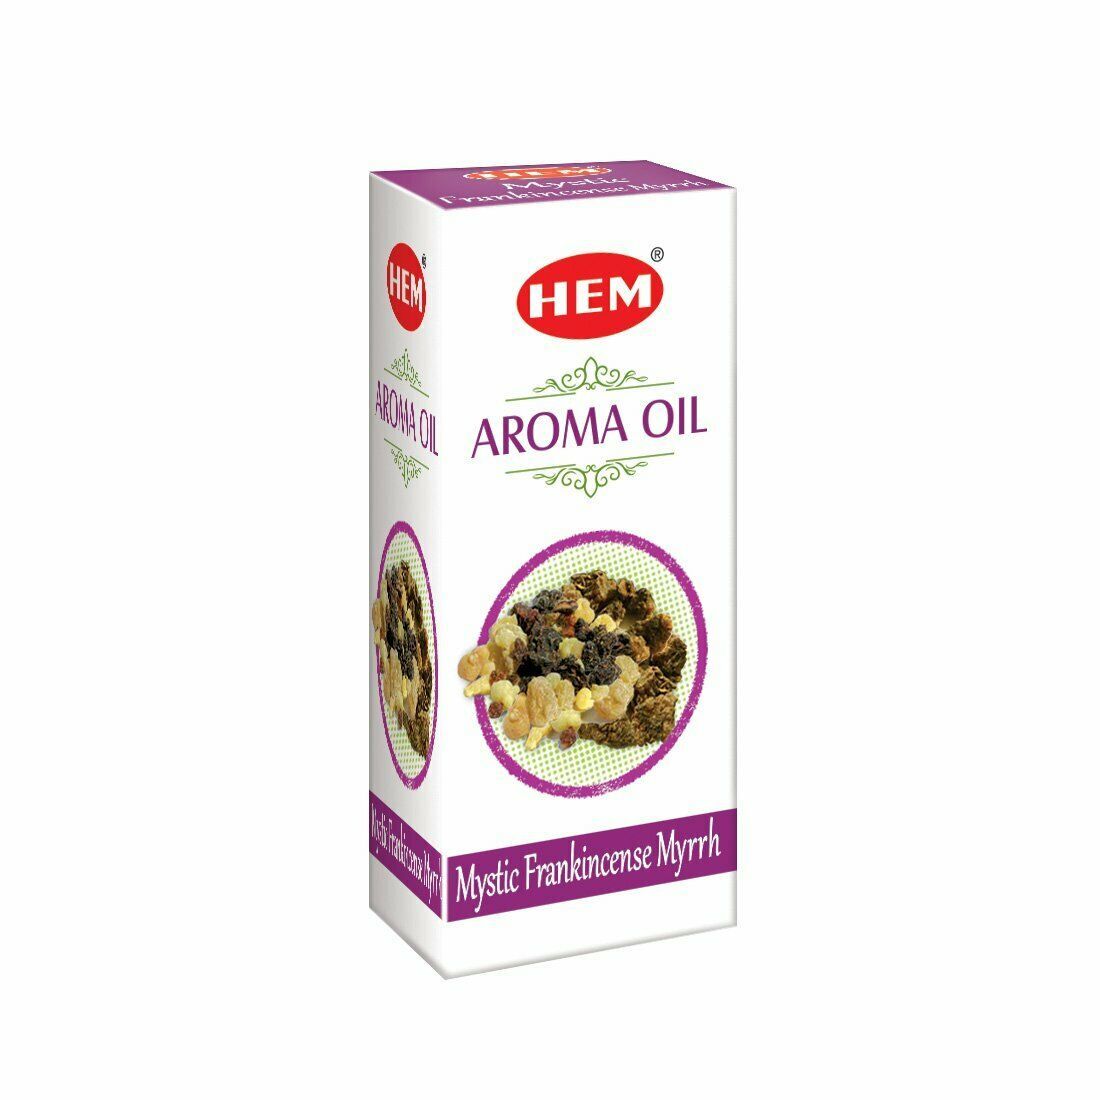 Hem Mystic Frankincense Myrrh Aroma Oil (2.8 cm x 2.8 cm x 6.5 cm, White) - $20.61